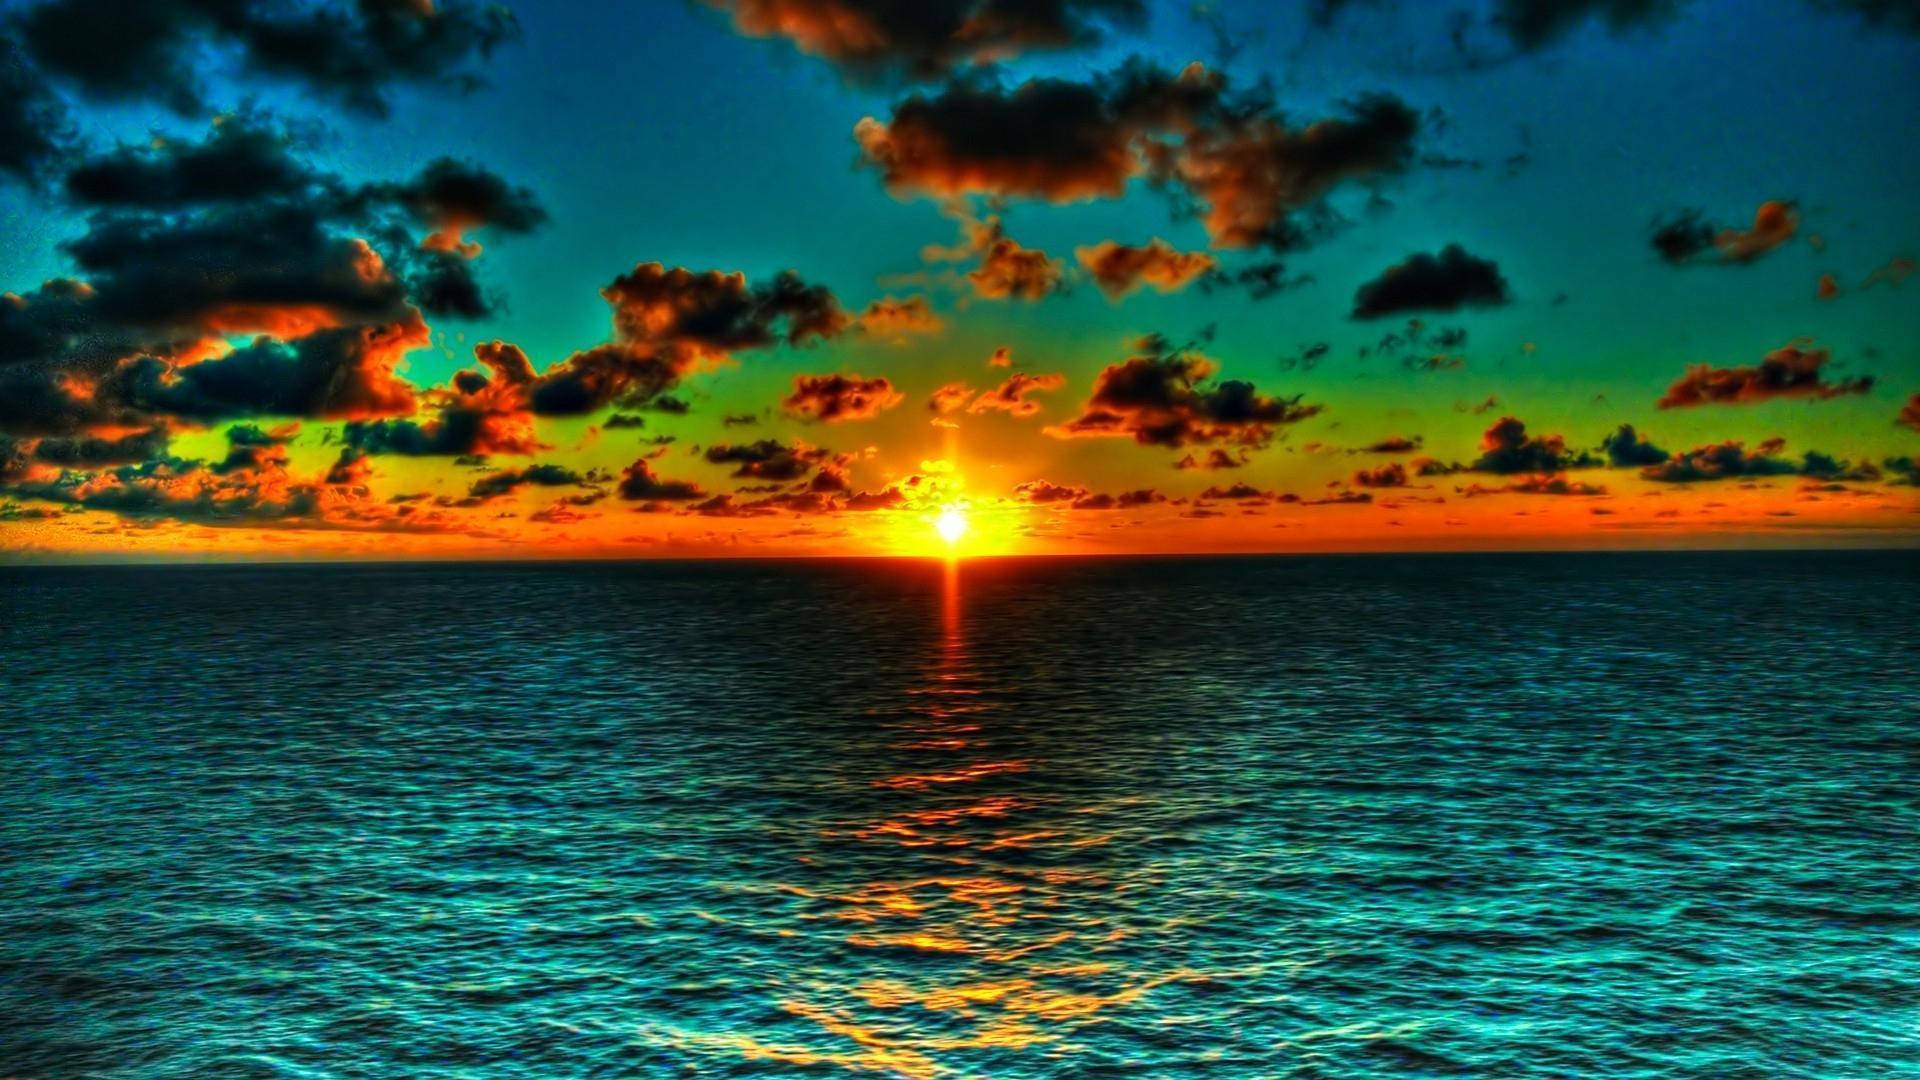 Caption: Mesmerizing Ocean Sunset